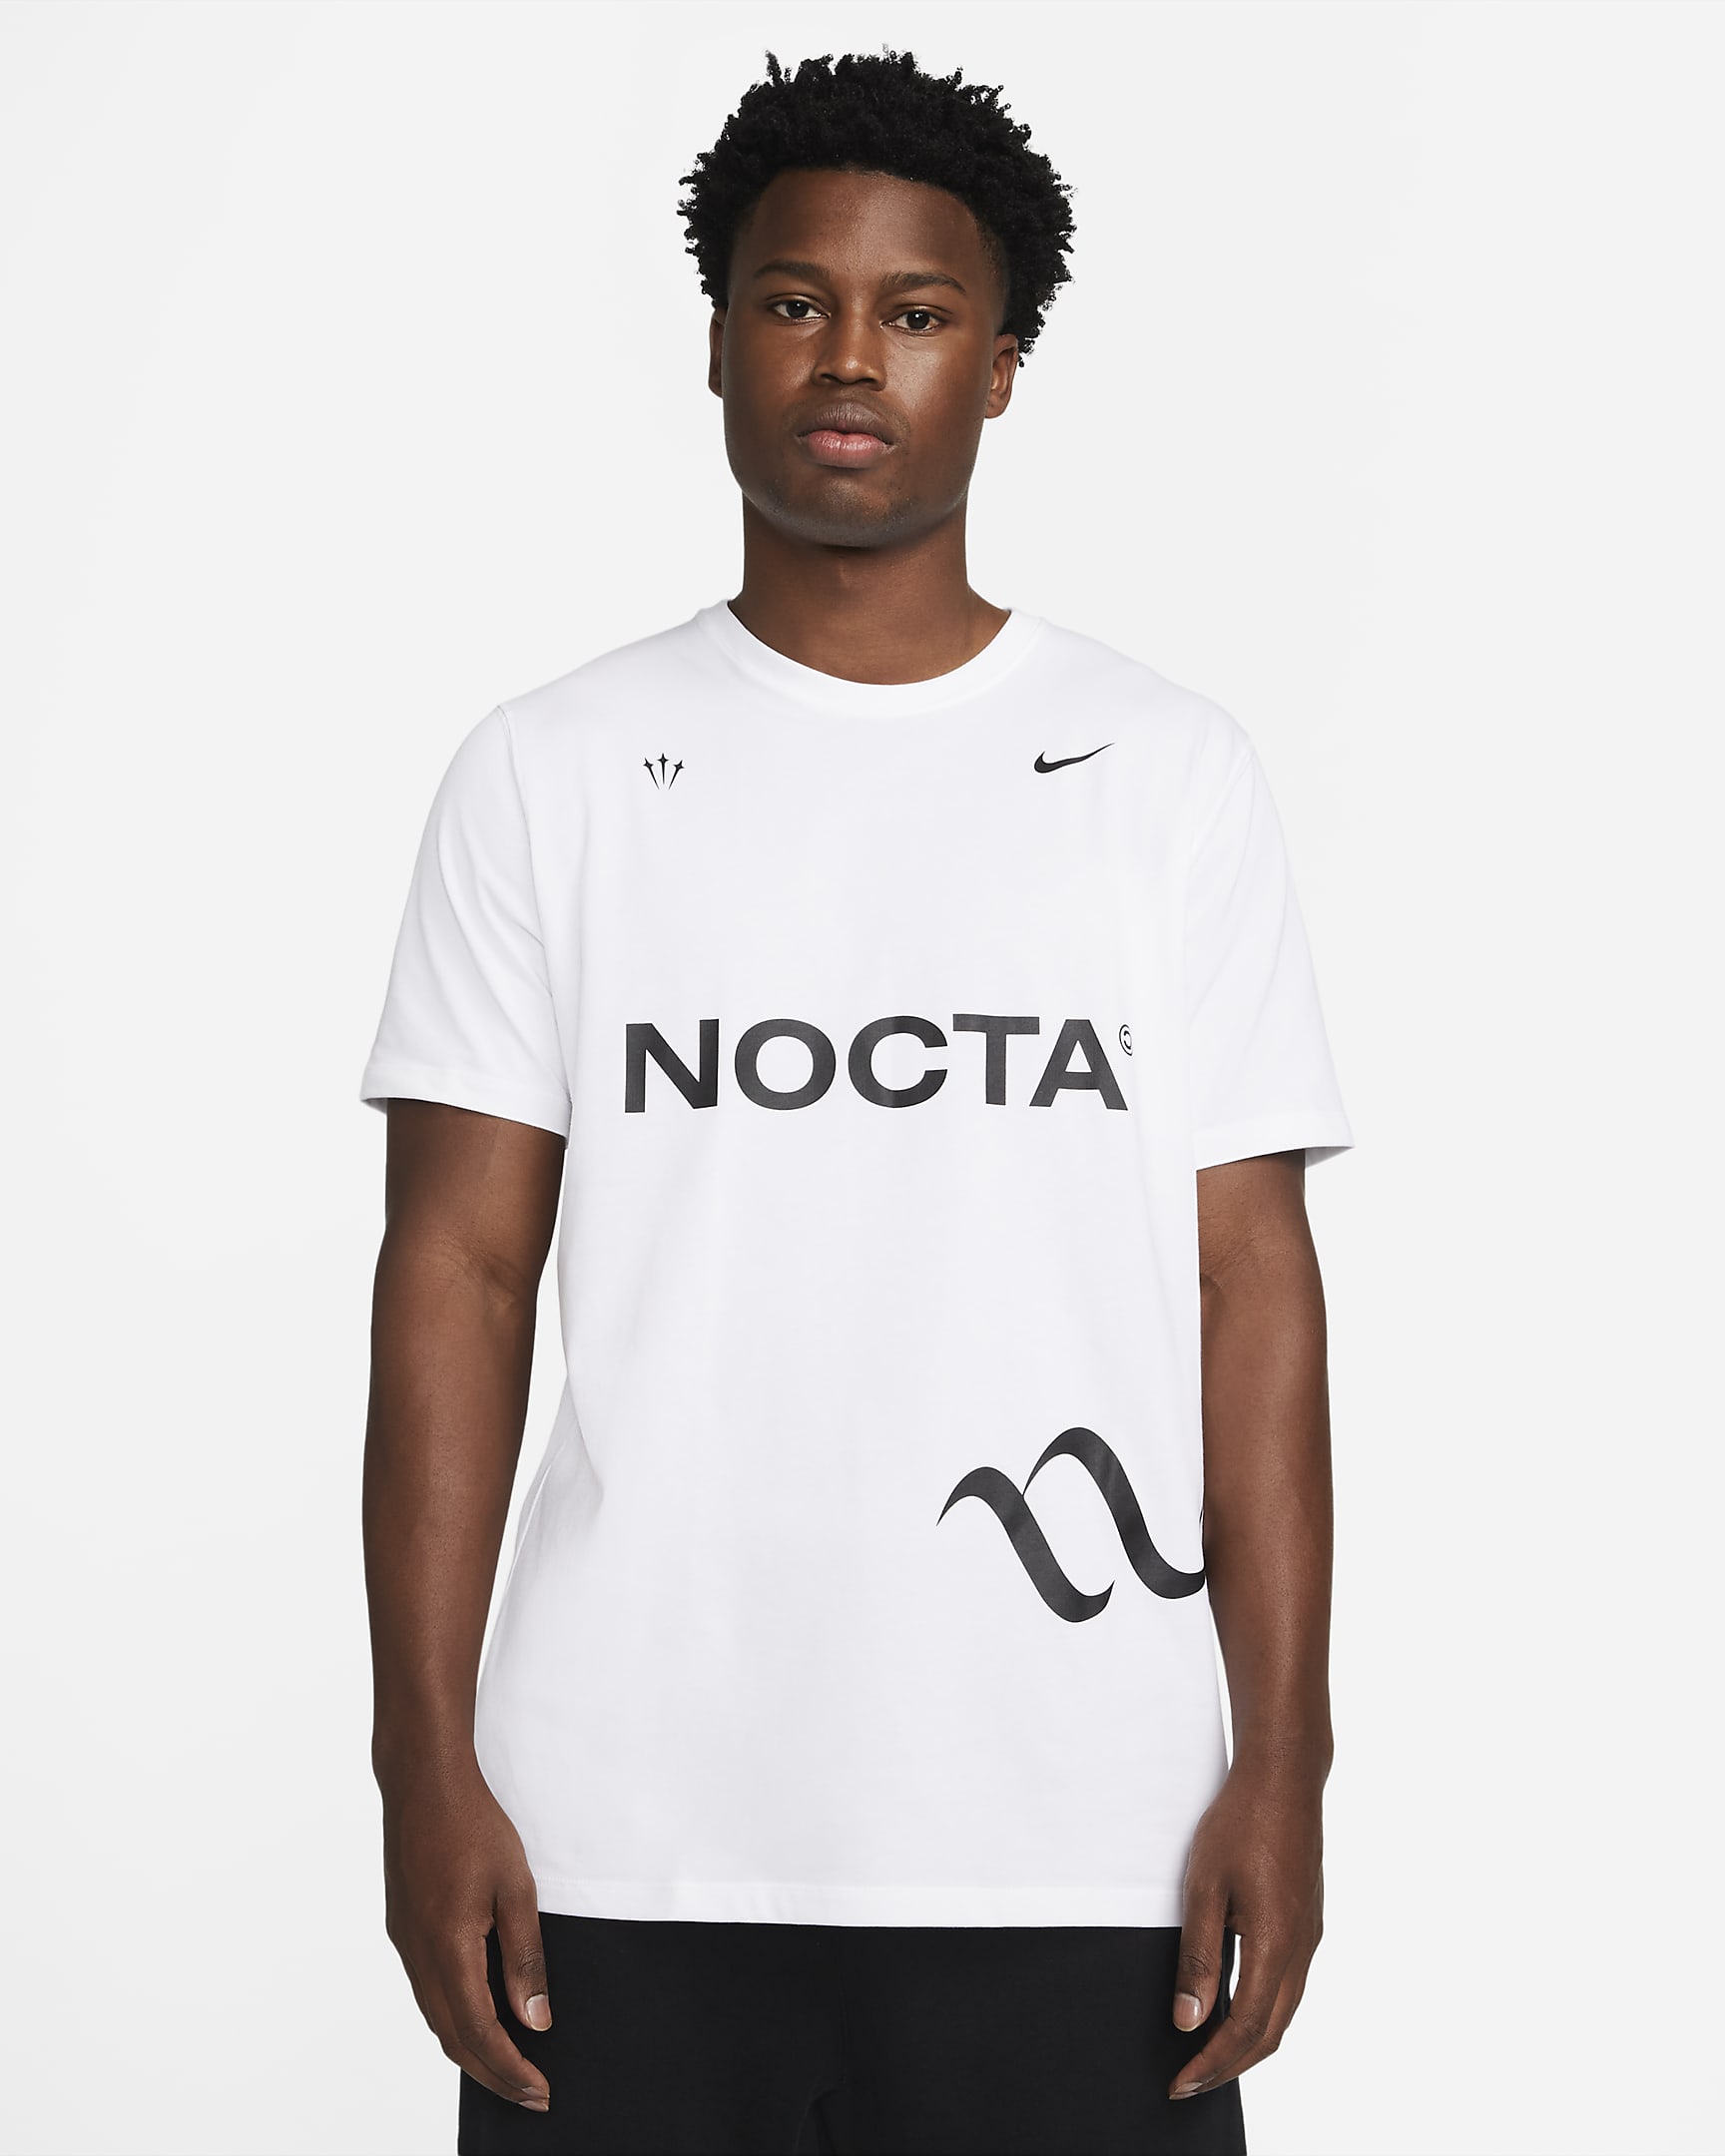 NOCTA Men's Short-Sleeve Basketball Top. Nike.com